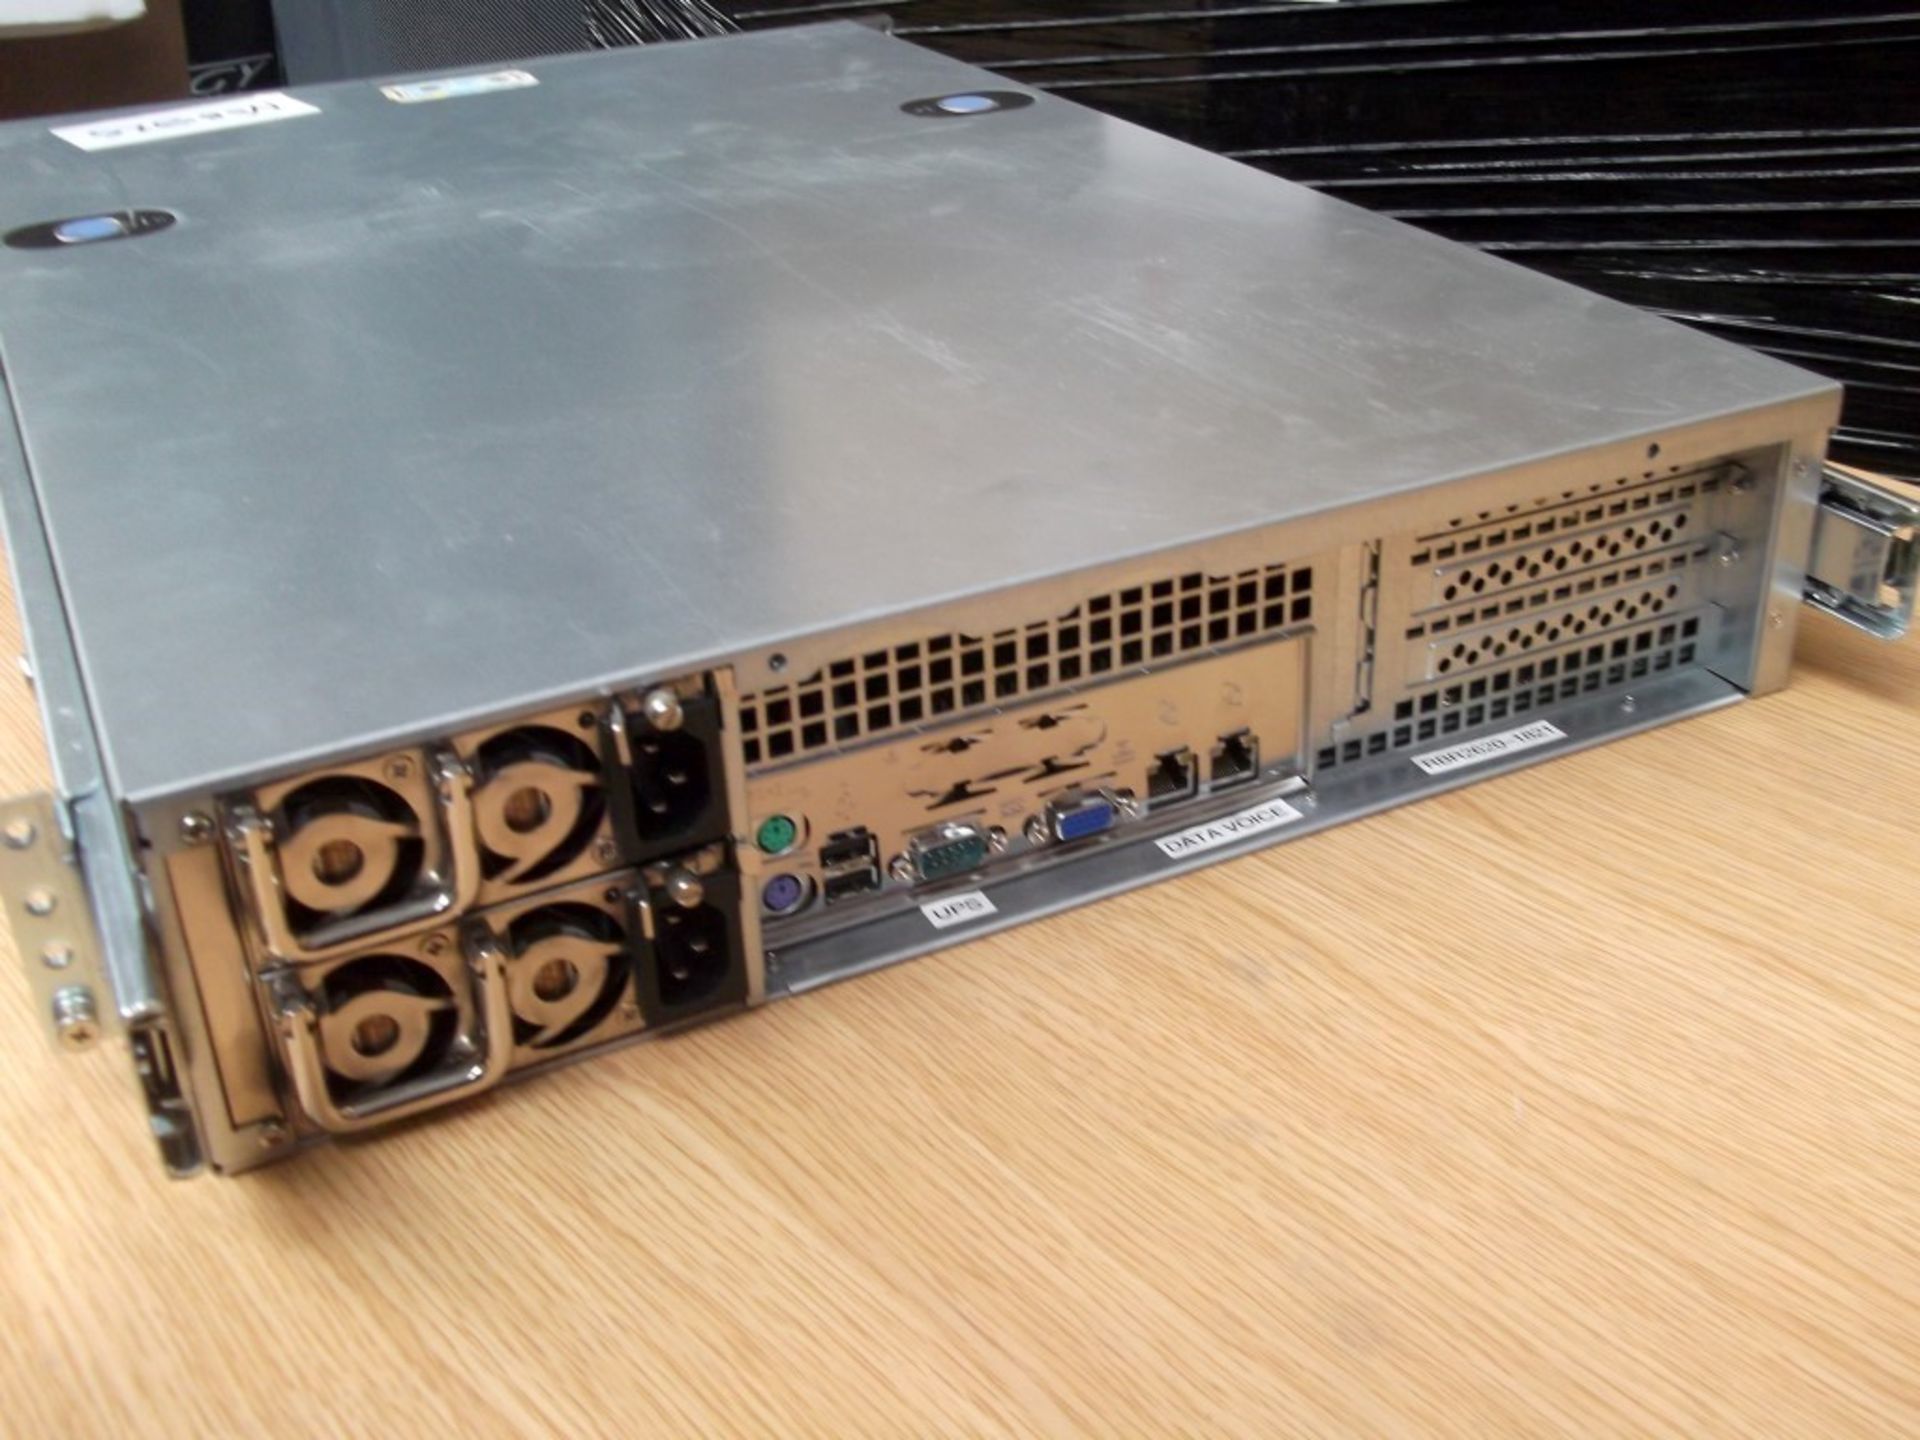 1 x Redbox Recorder - Enterprise IPT / Voice Recording Rackmount Server - Model RBR 2620 - Core 2 - Image 2 of 5